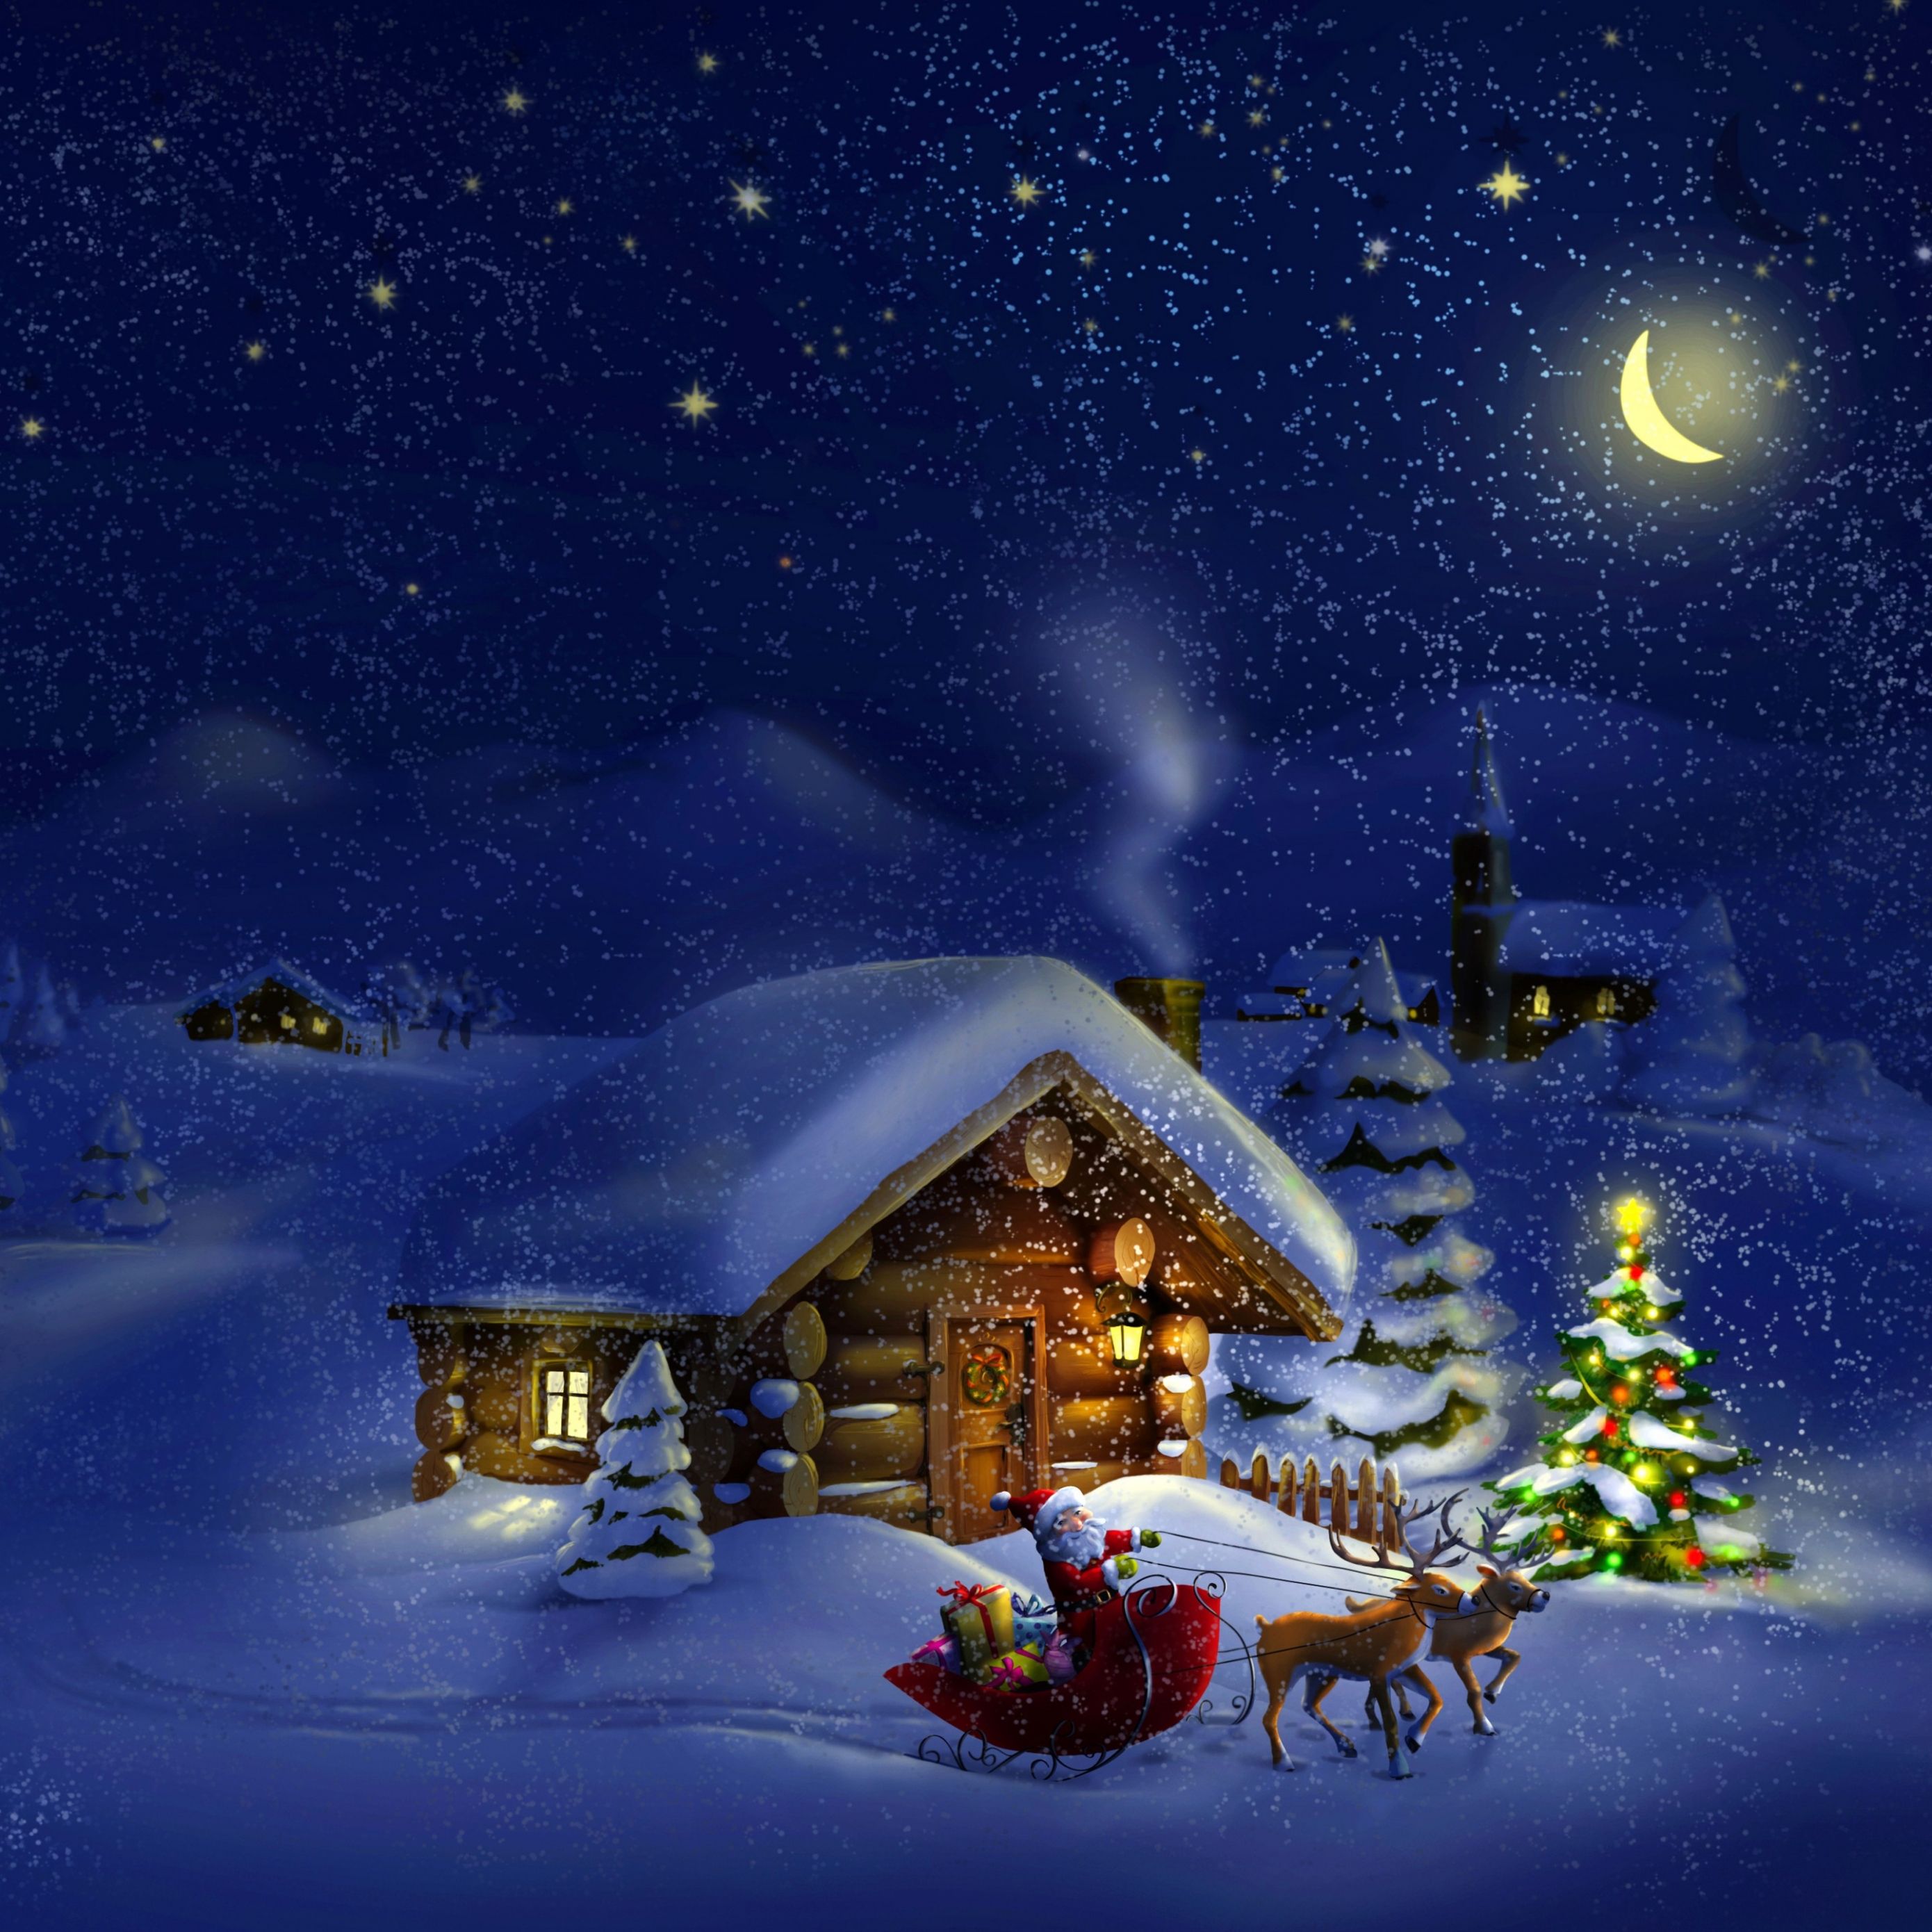 Download Christmas, New Year, Santa, deer, moon, night, winter, house, snow, 4k Apple iPad Air wallpaper 2780x2780